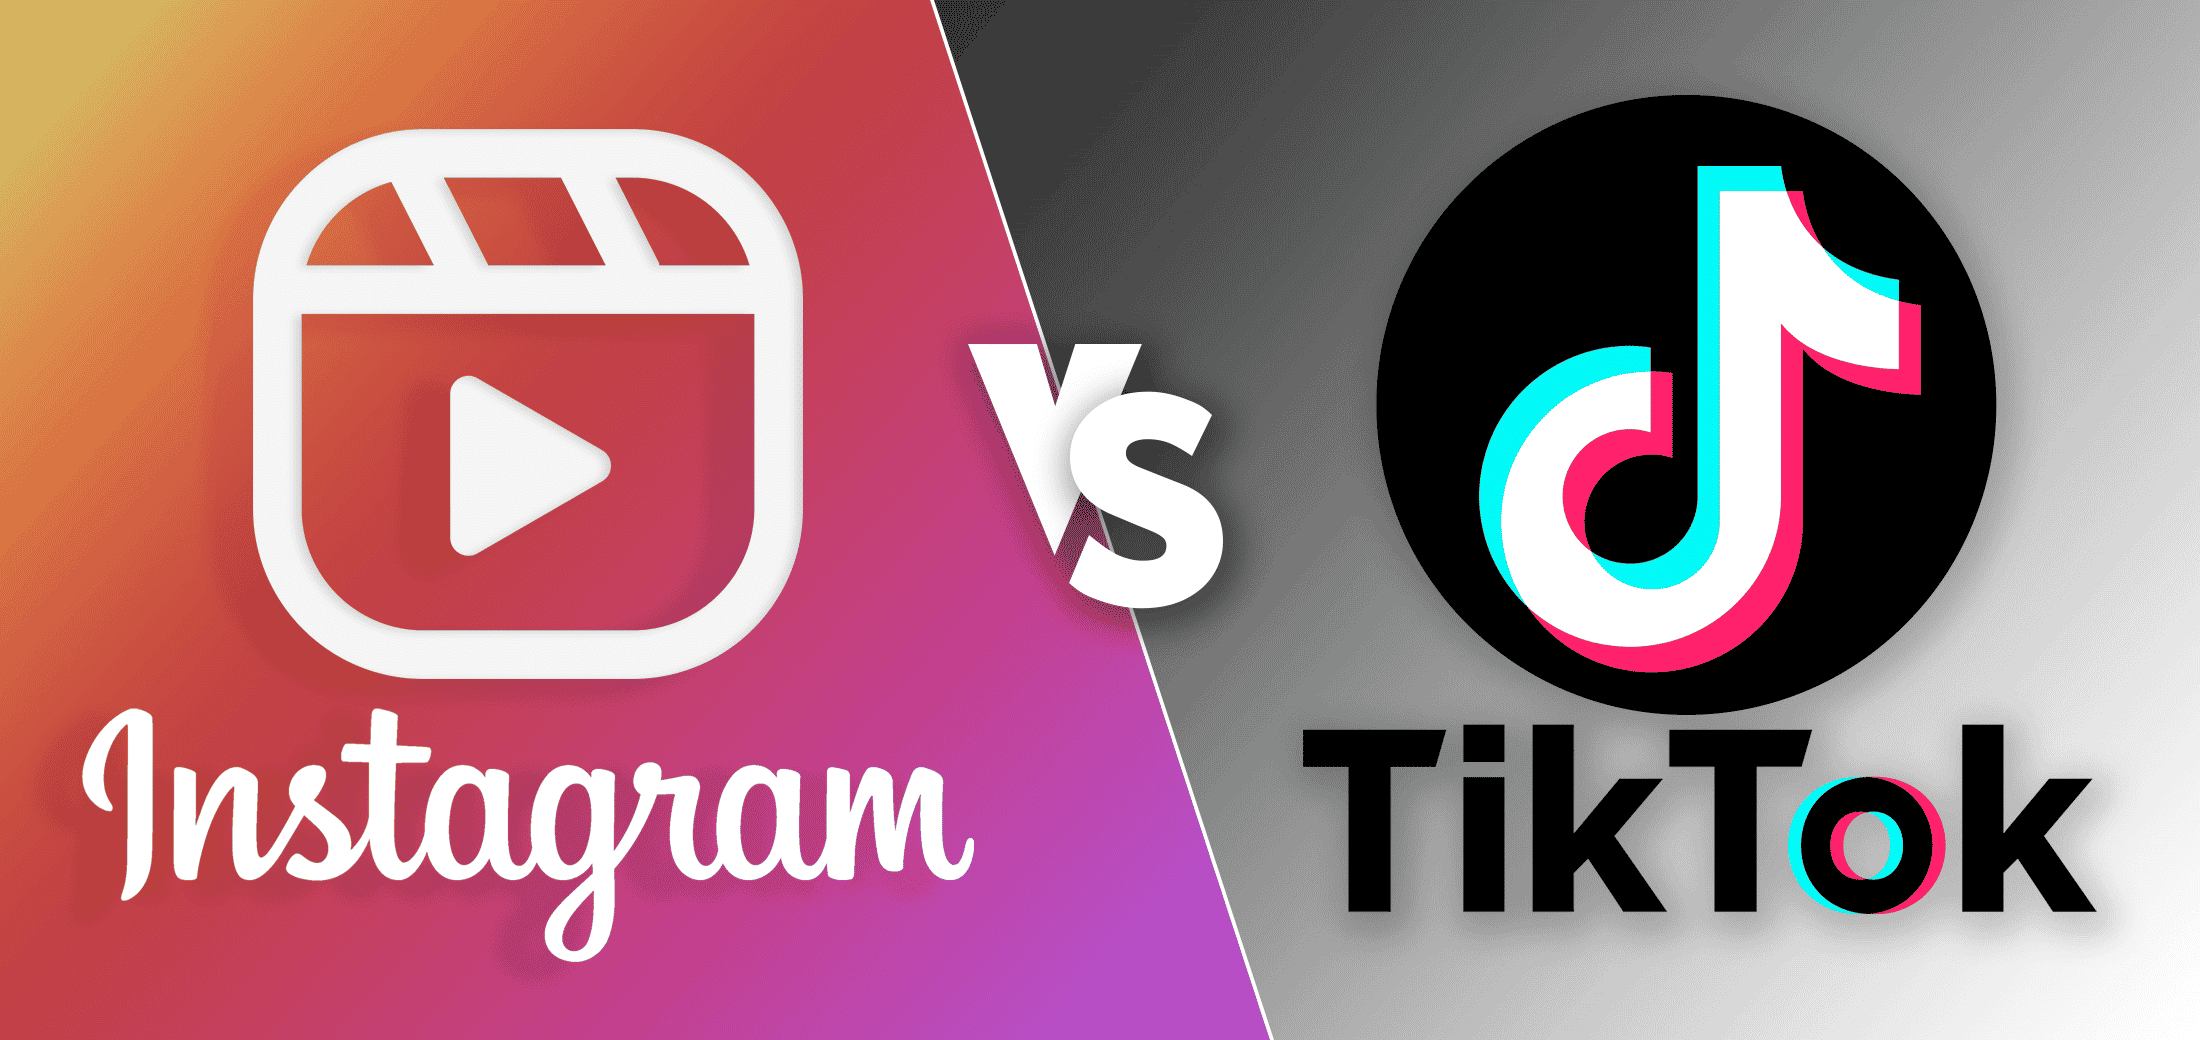 Instagram vs TikTok : Les principales différences en 2022